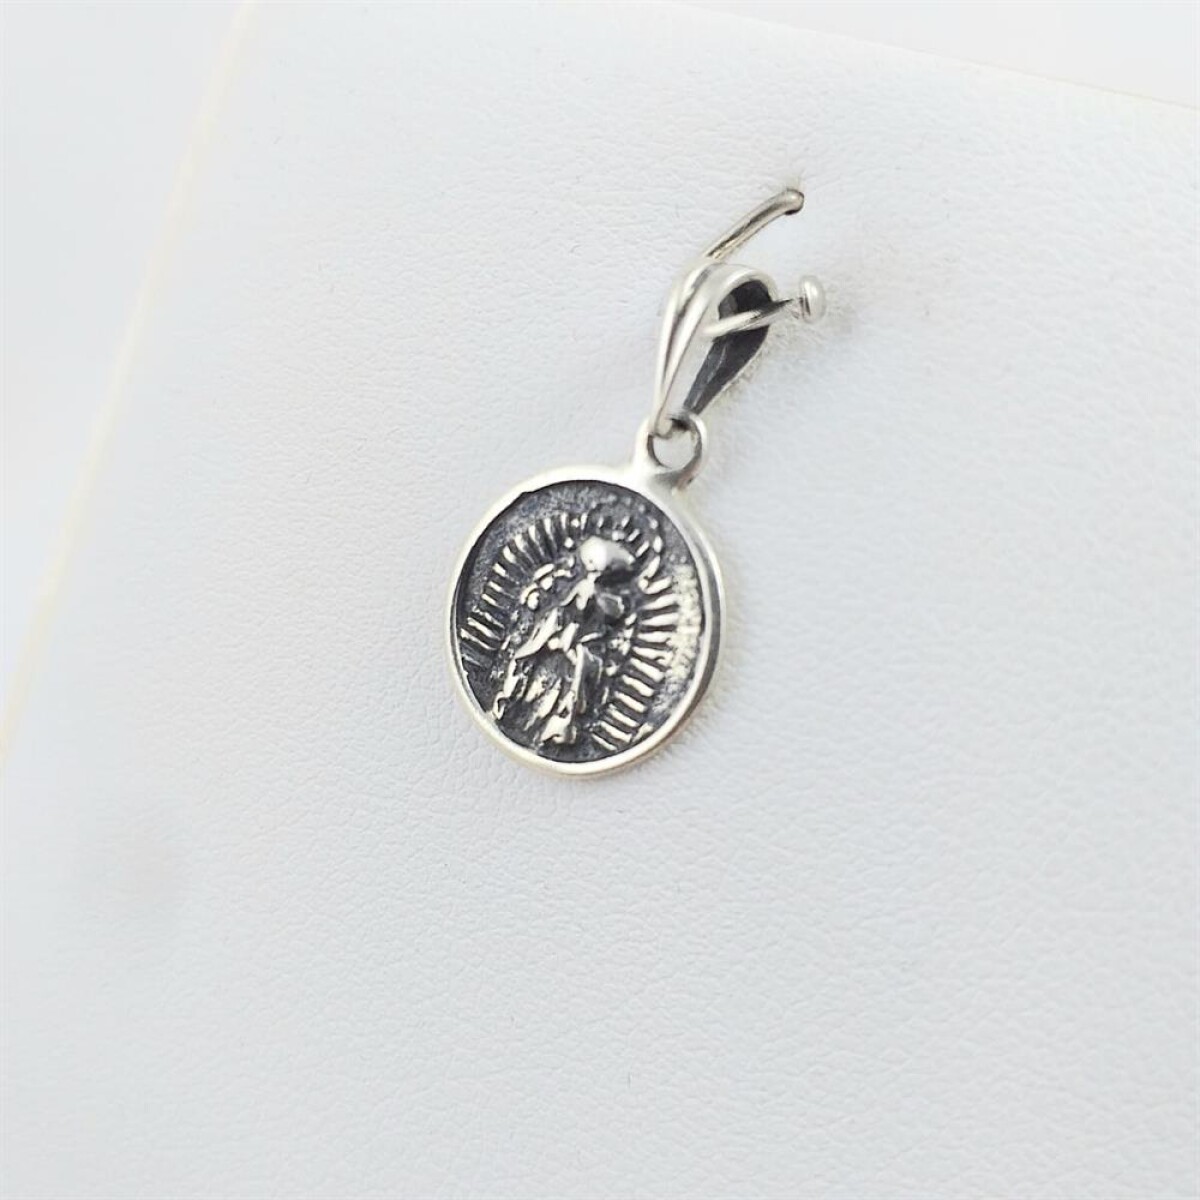 Medalla religiosa de plata 925, Virgen de Guadalupe, diámetro 13mm. 